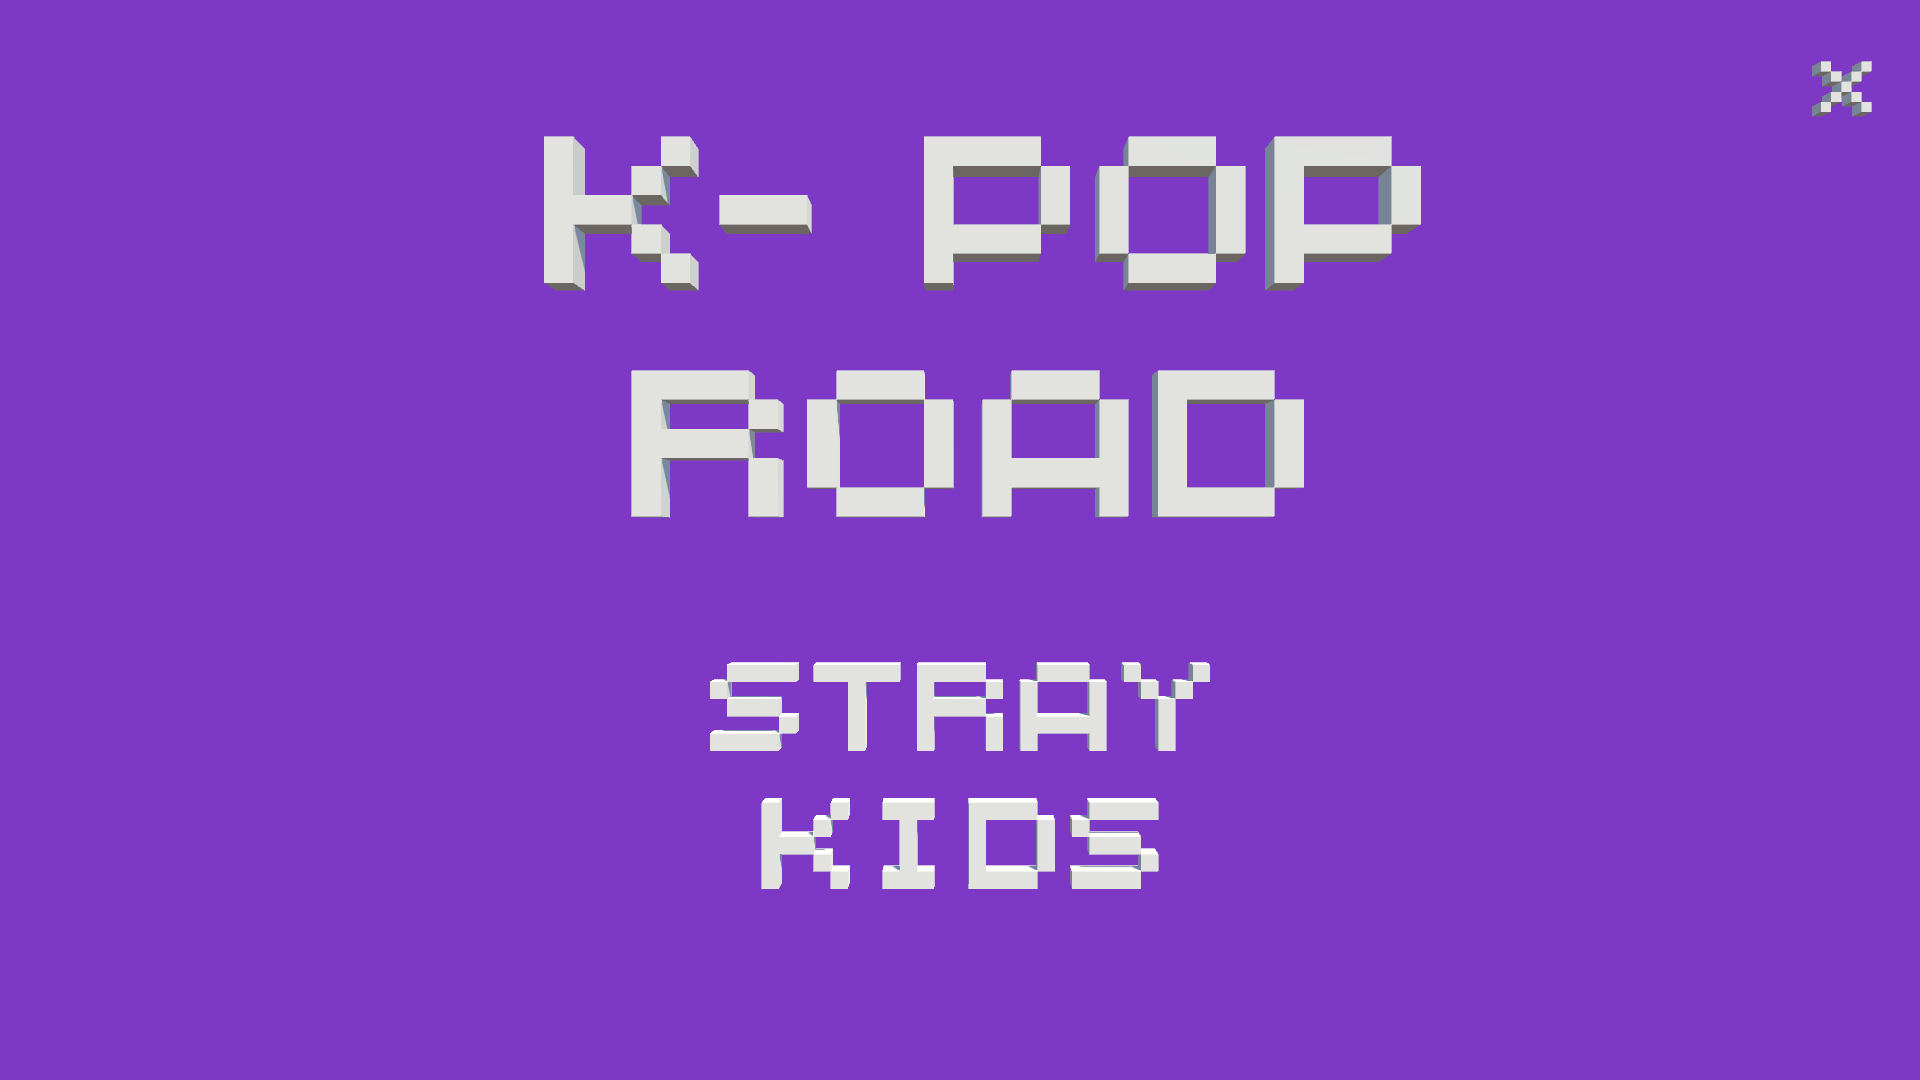 K-pop road